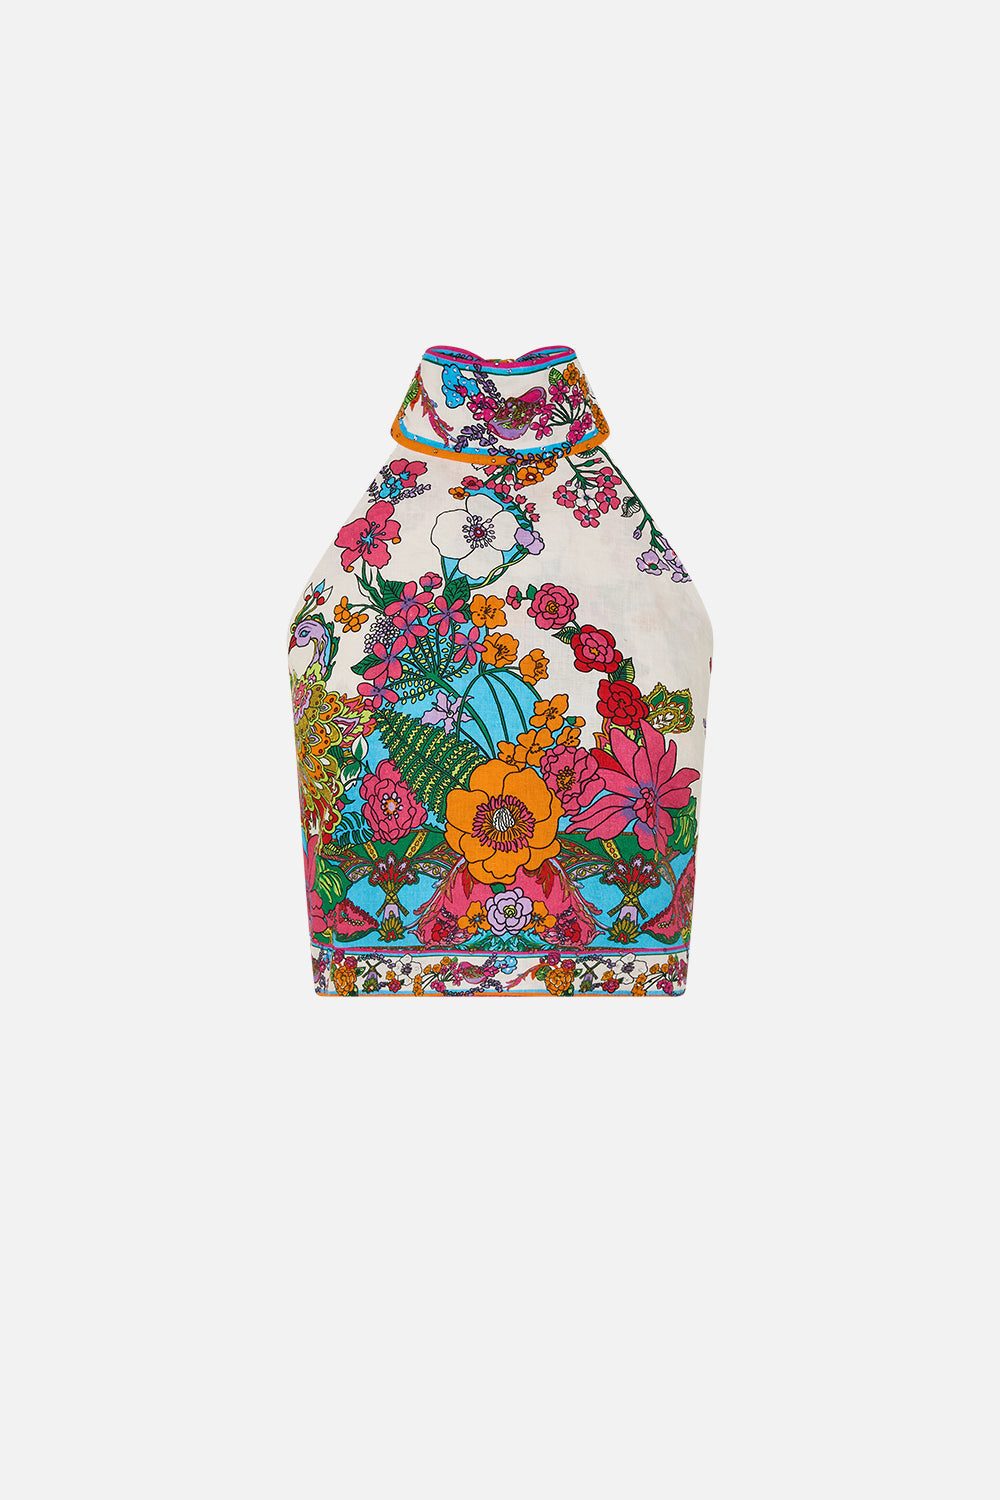 CAMILLA floral halter tie back top in Cosmi Prairie print.